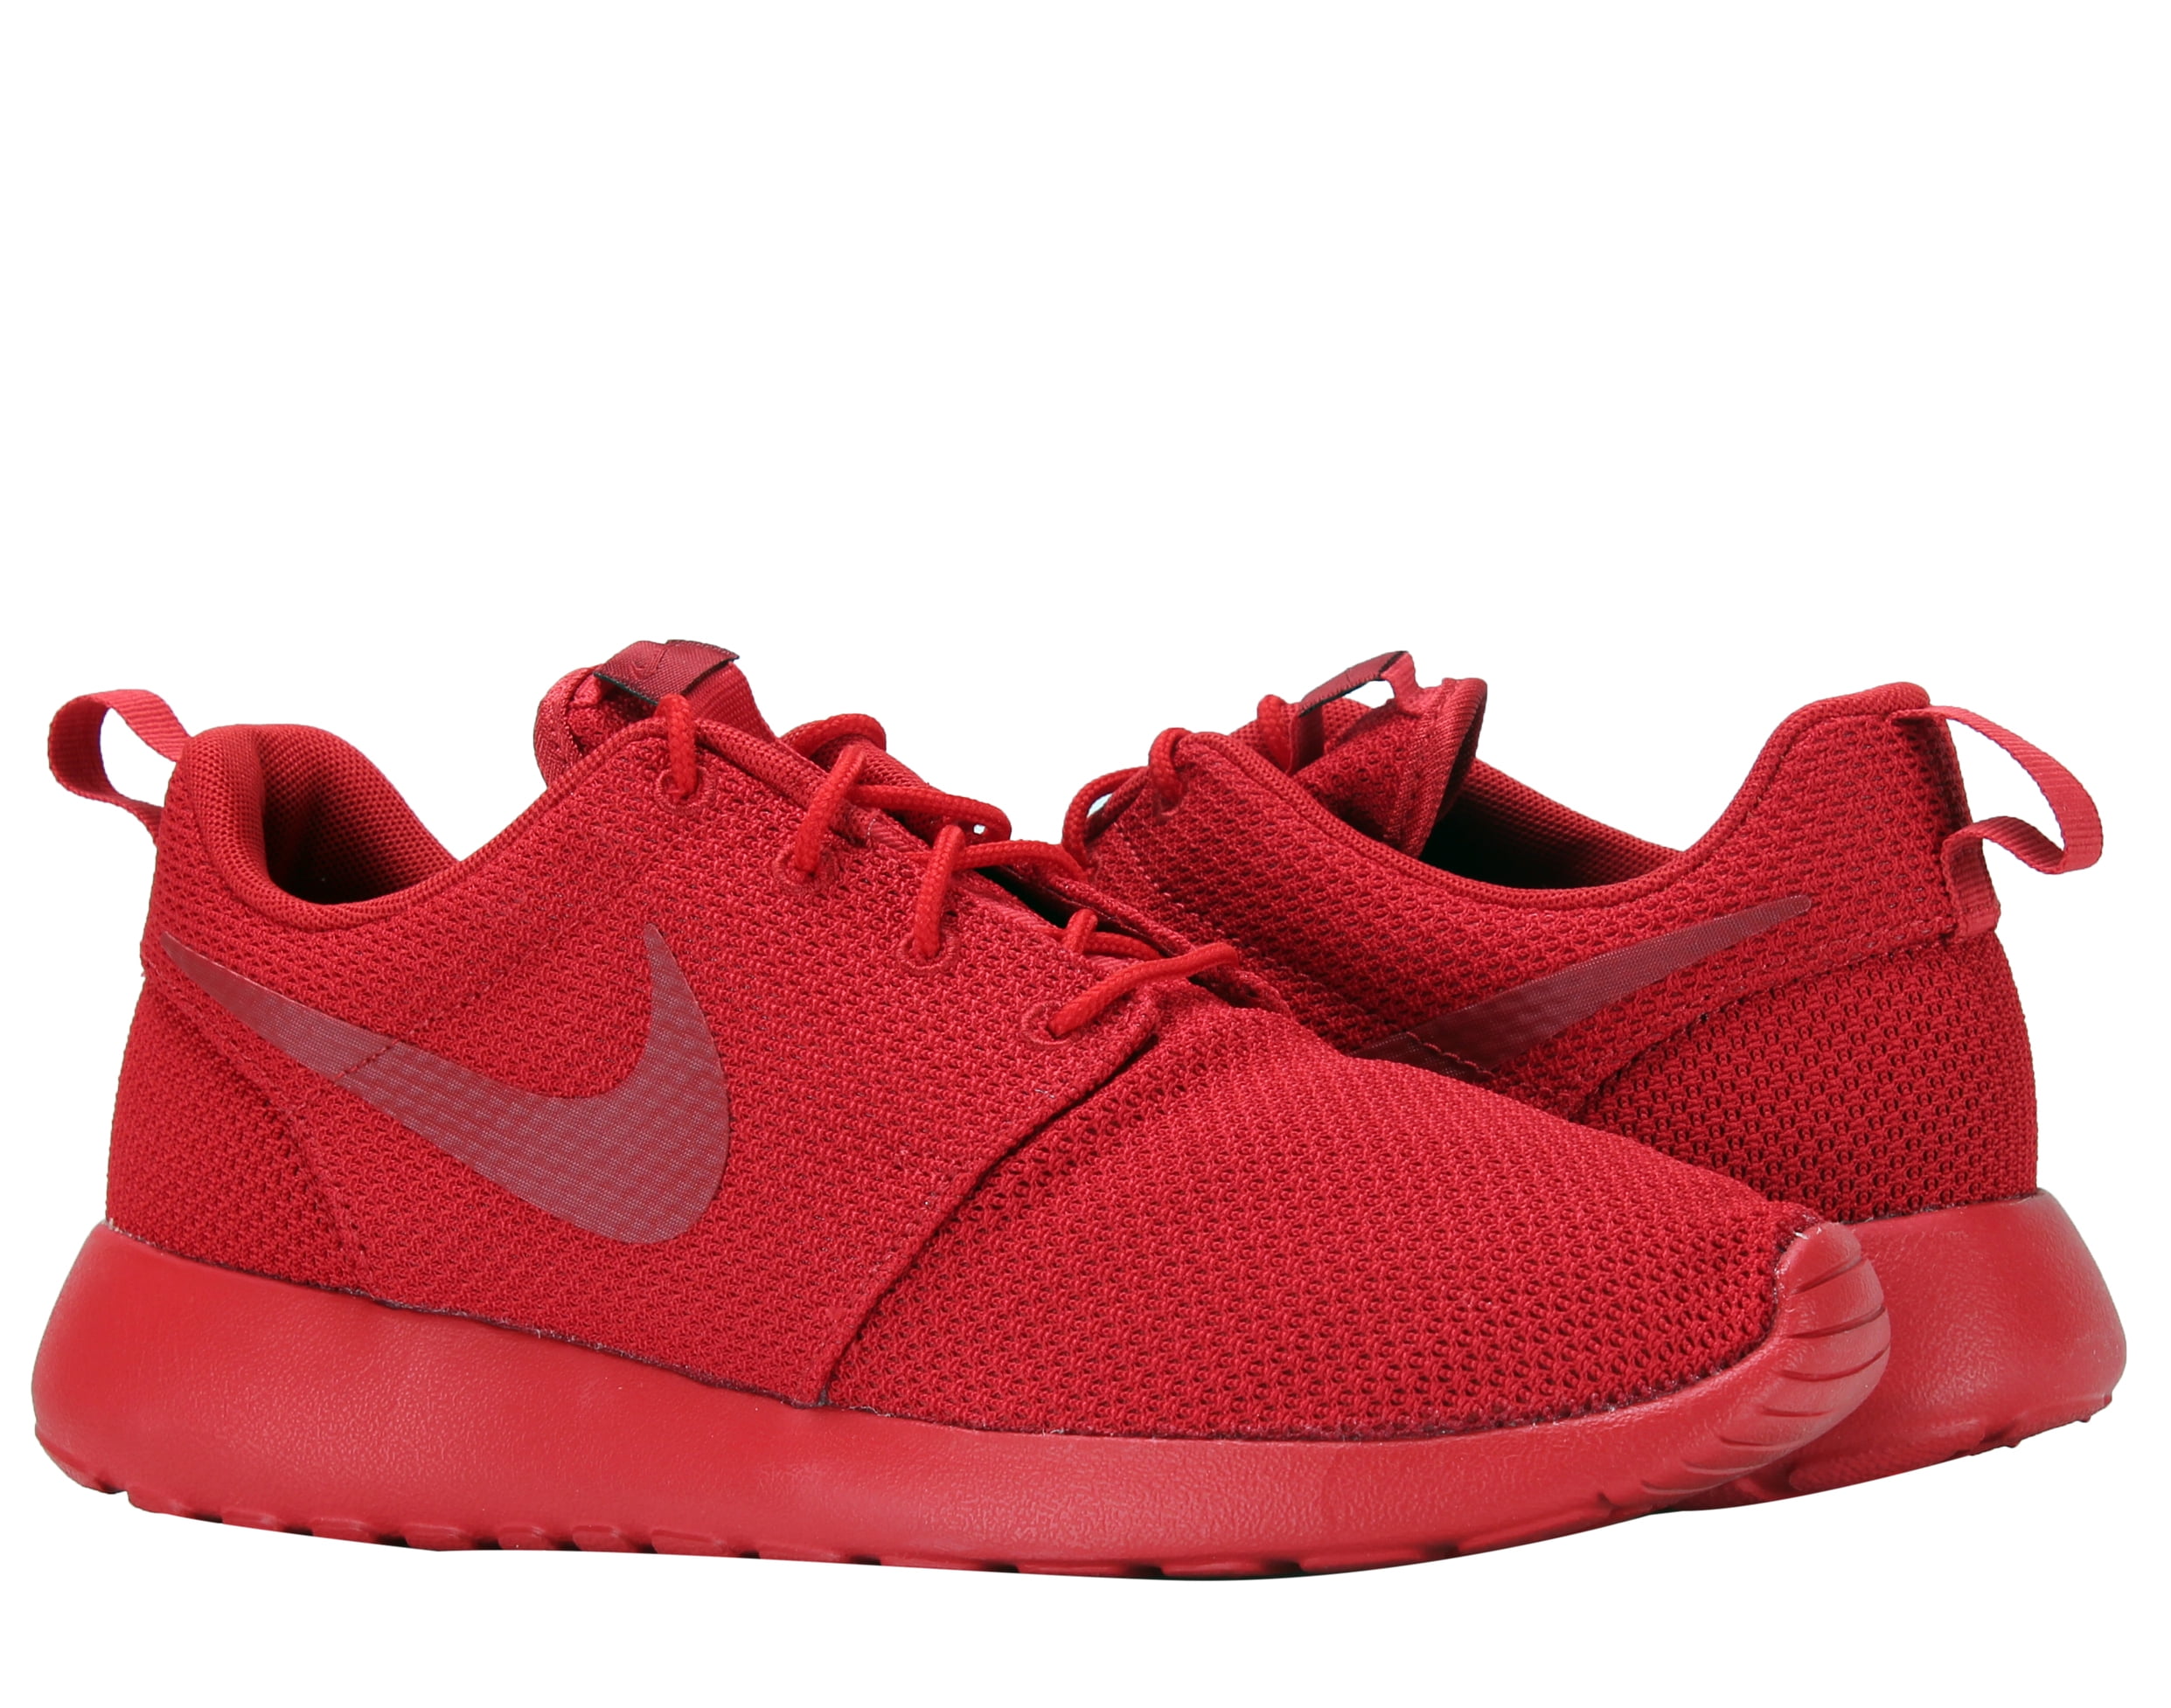 Nike One Running Shoes 8.5 Walmart.com